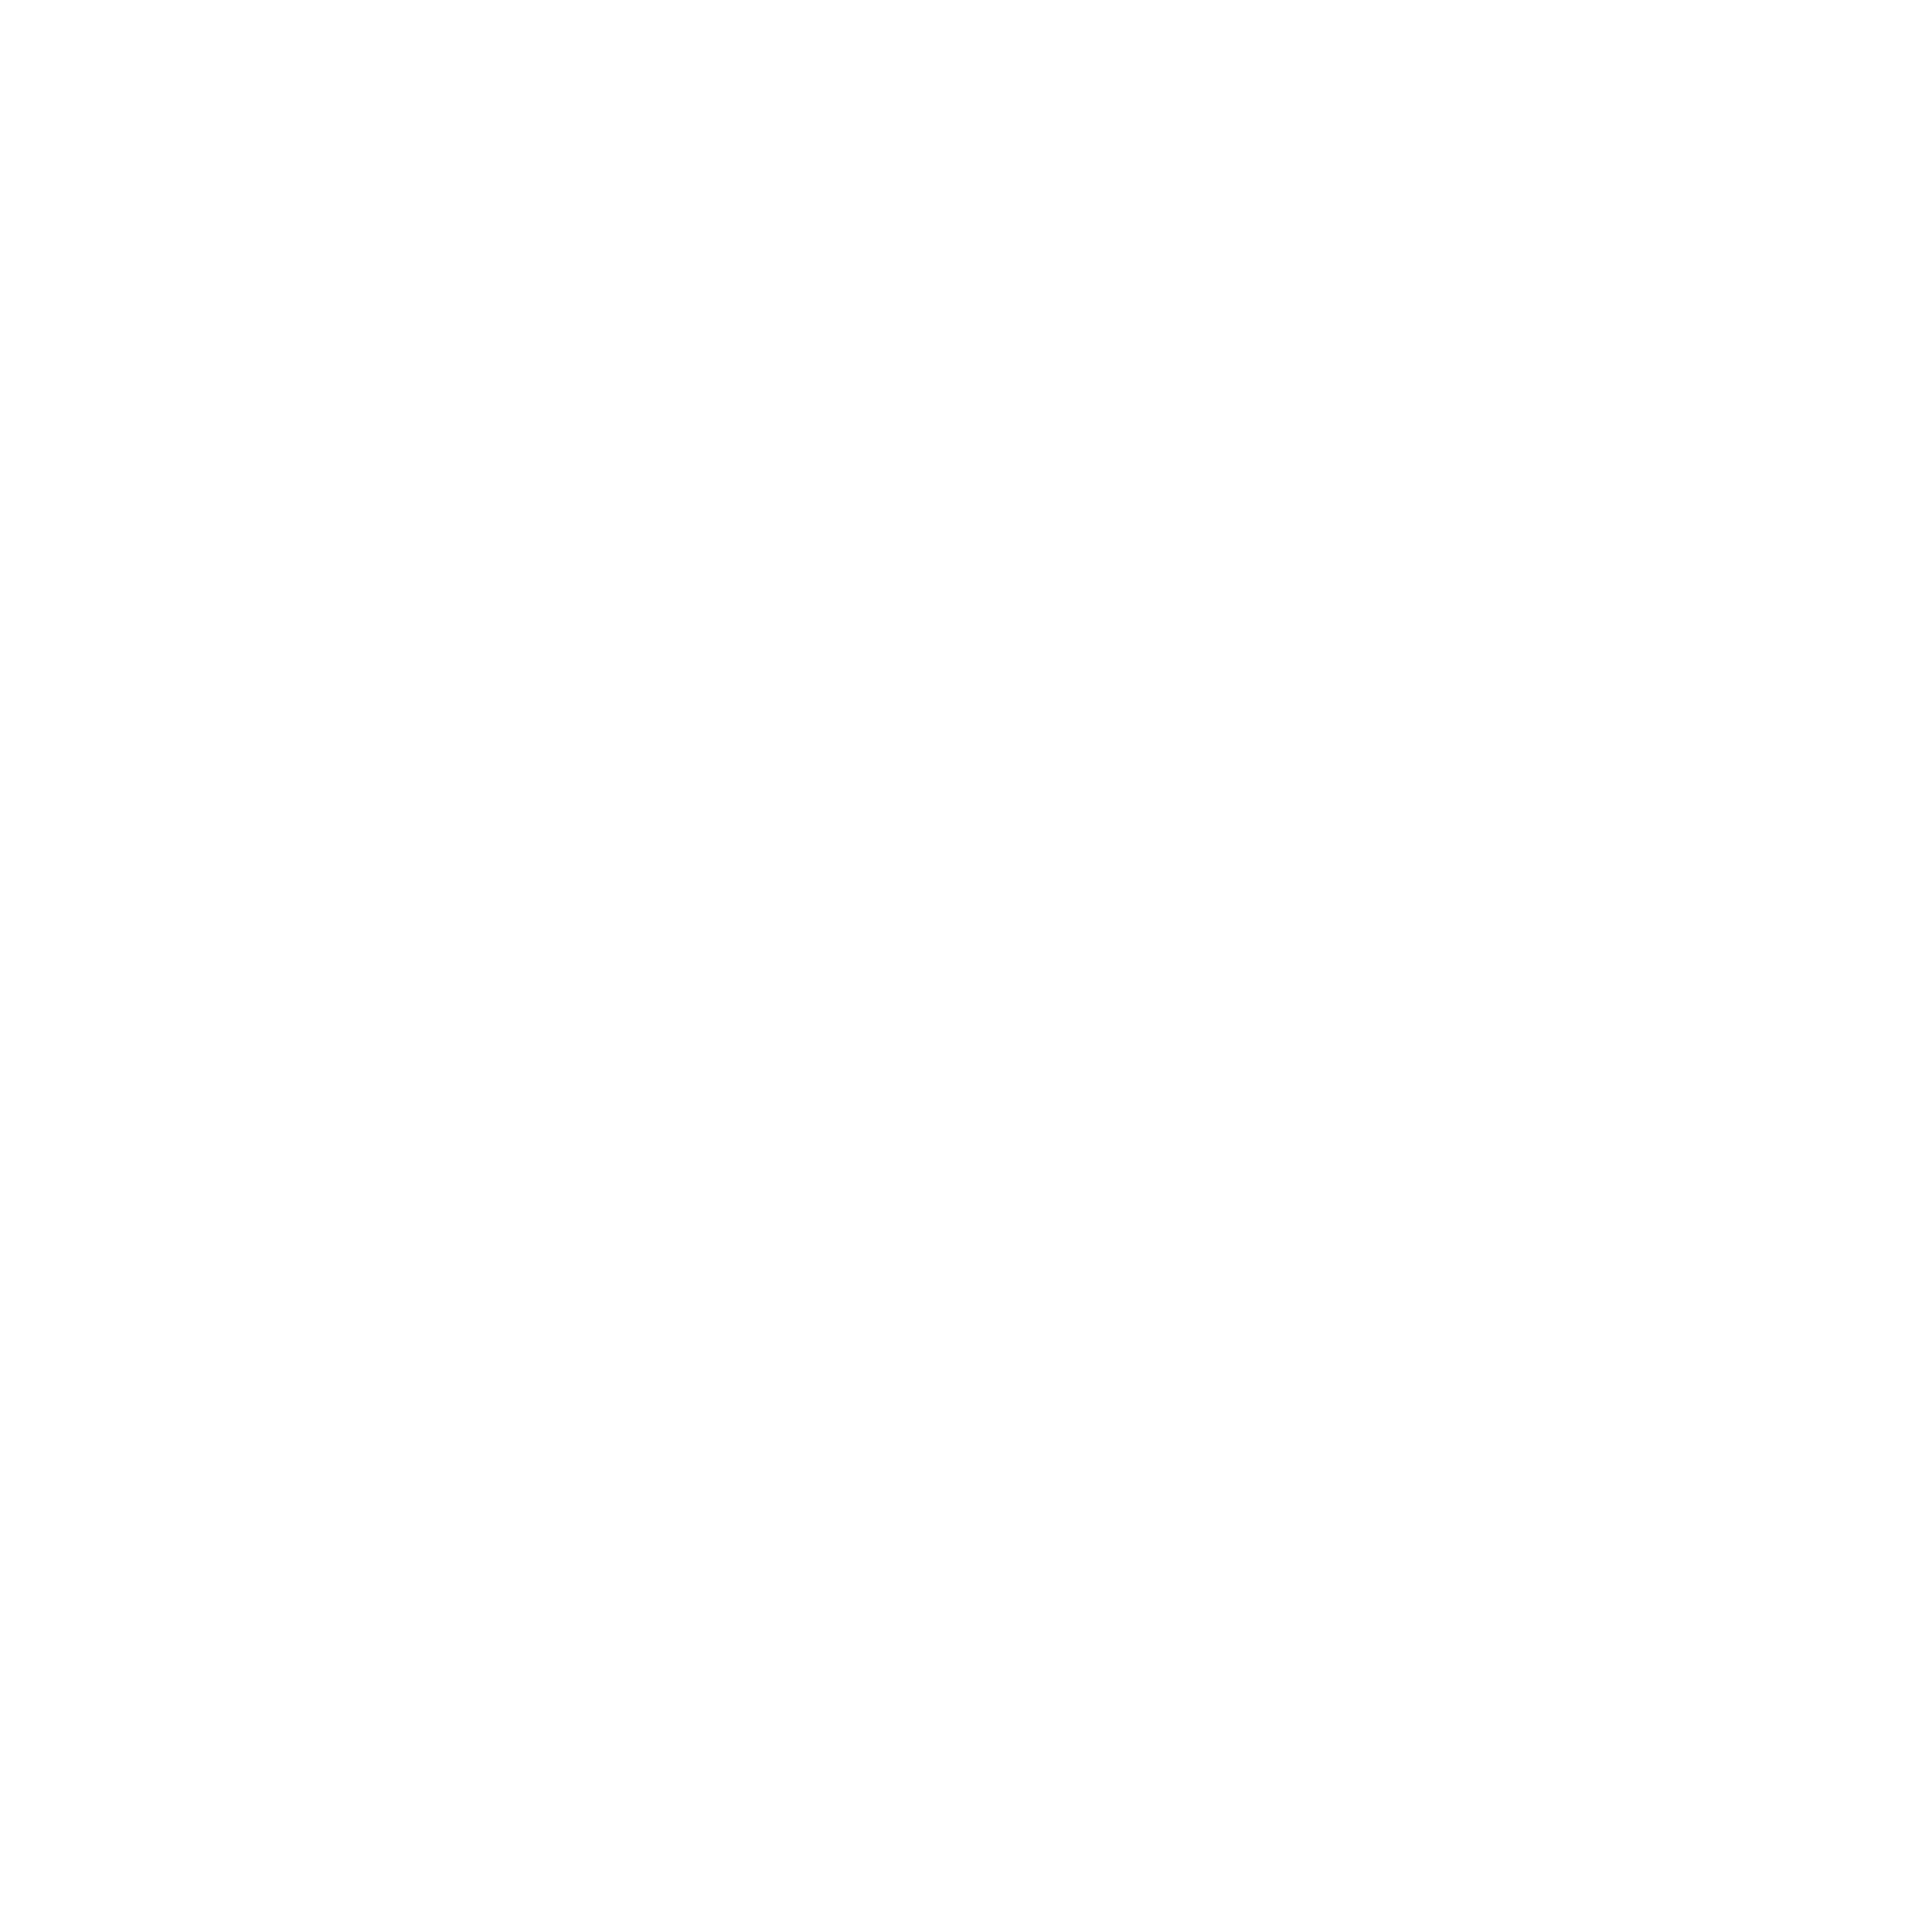 Harvest View